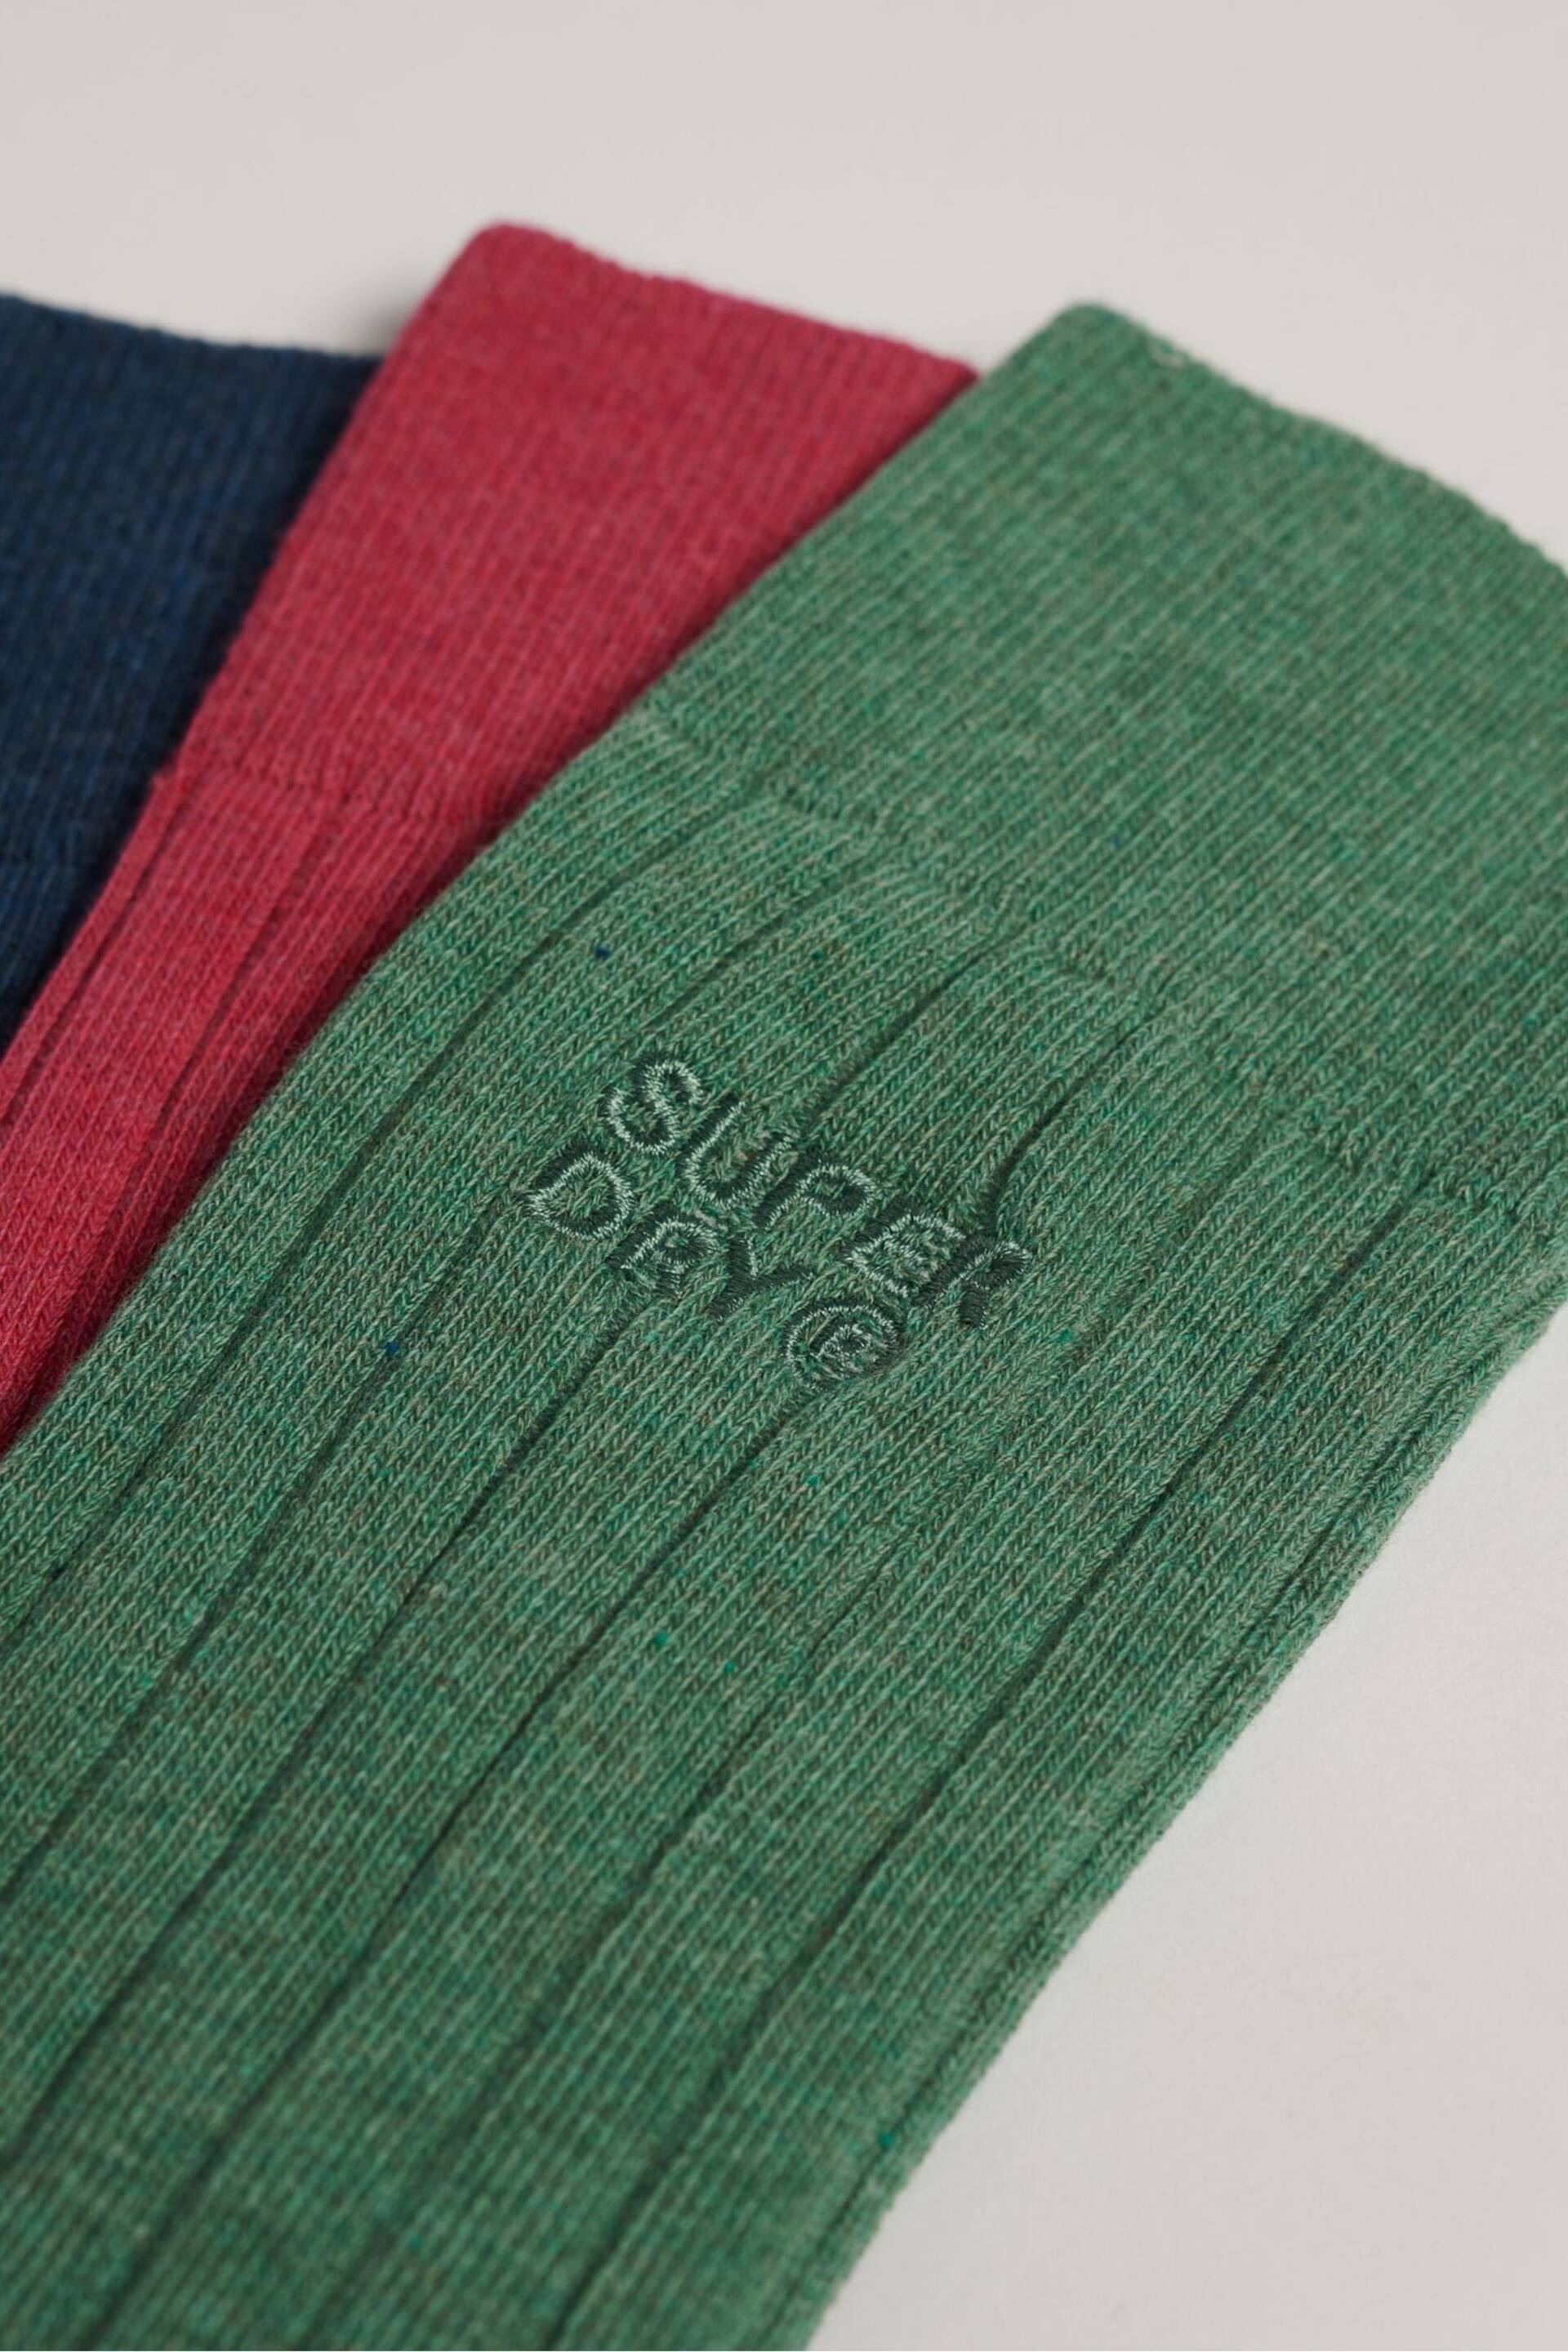 Superdry Blue Organic Cotton Unisex Core Rib Crew Socks 3 Pack - Image 5 of 5